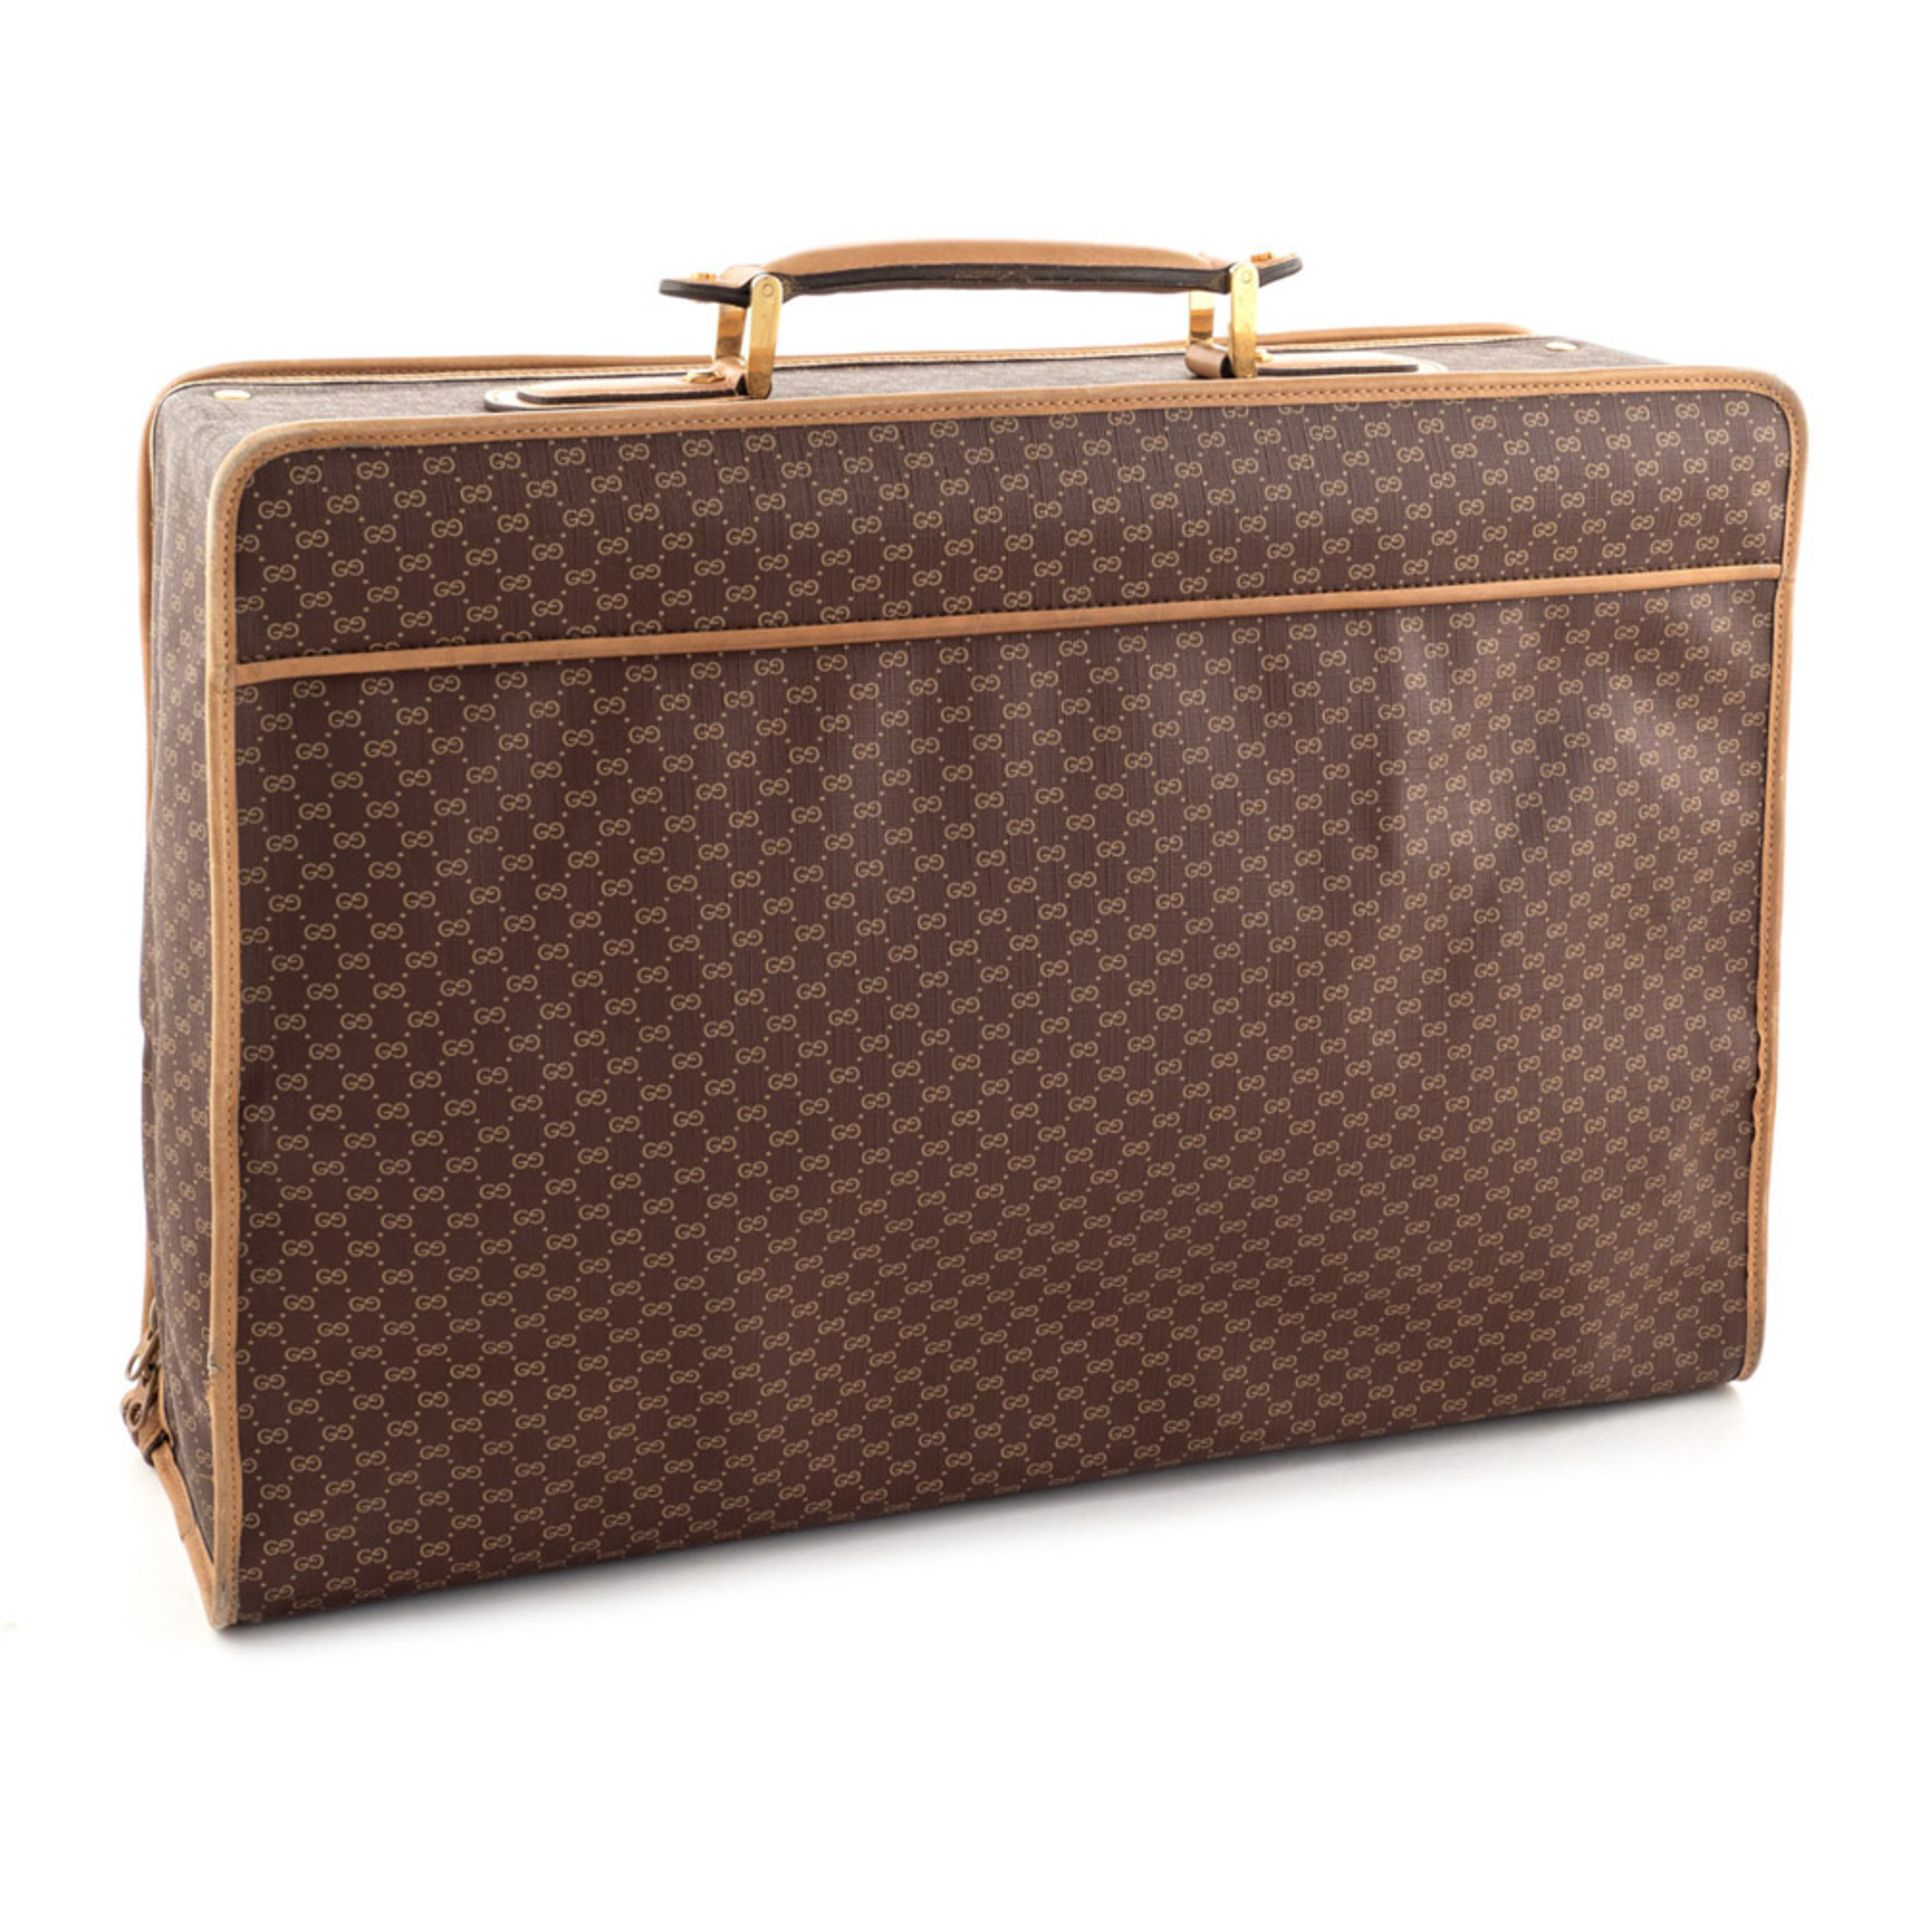 Gucci, vintage cabin suitcase 1970s circa 51,5x37x16,5 cm - Image 2 of 4